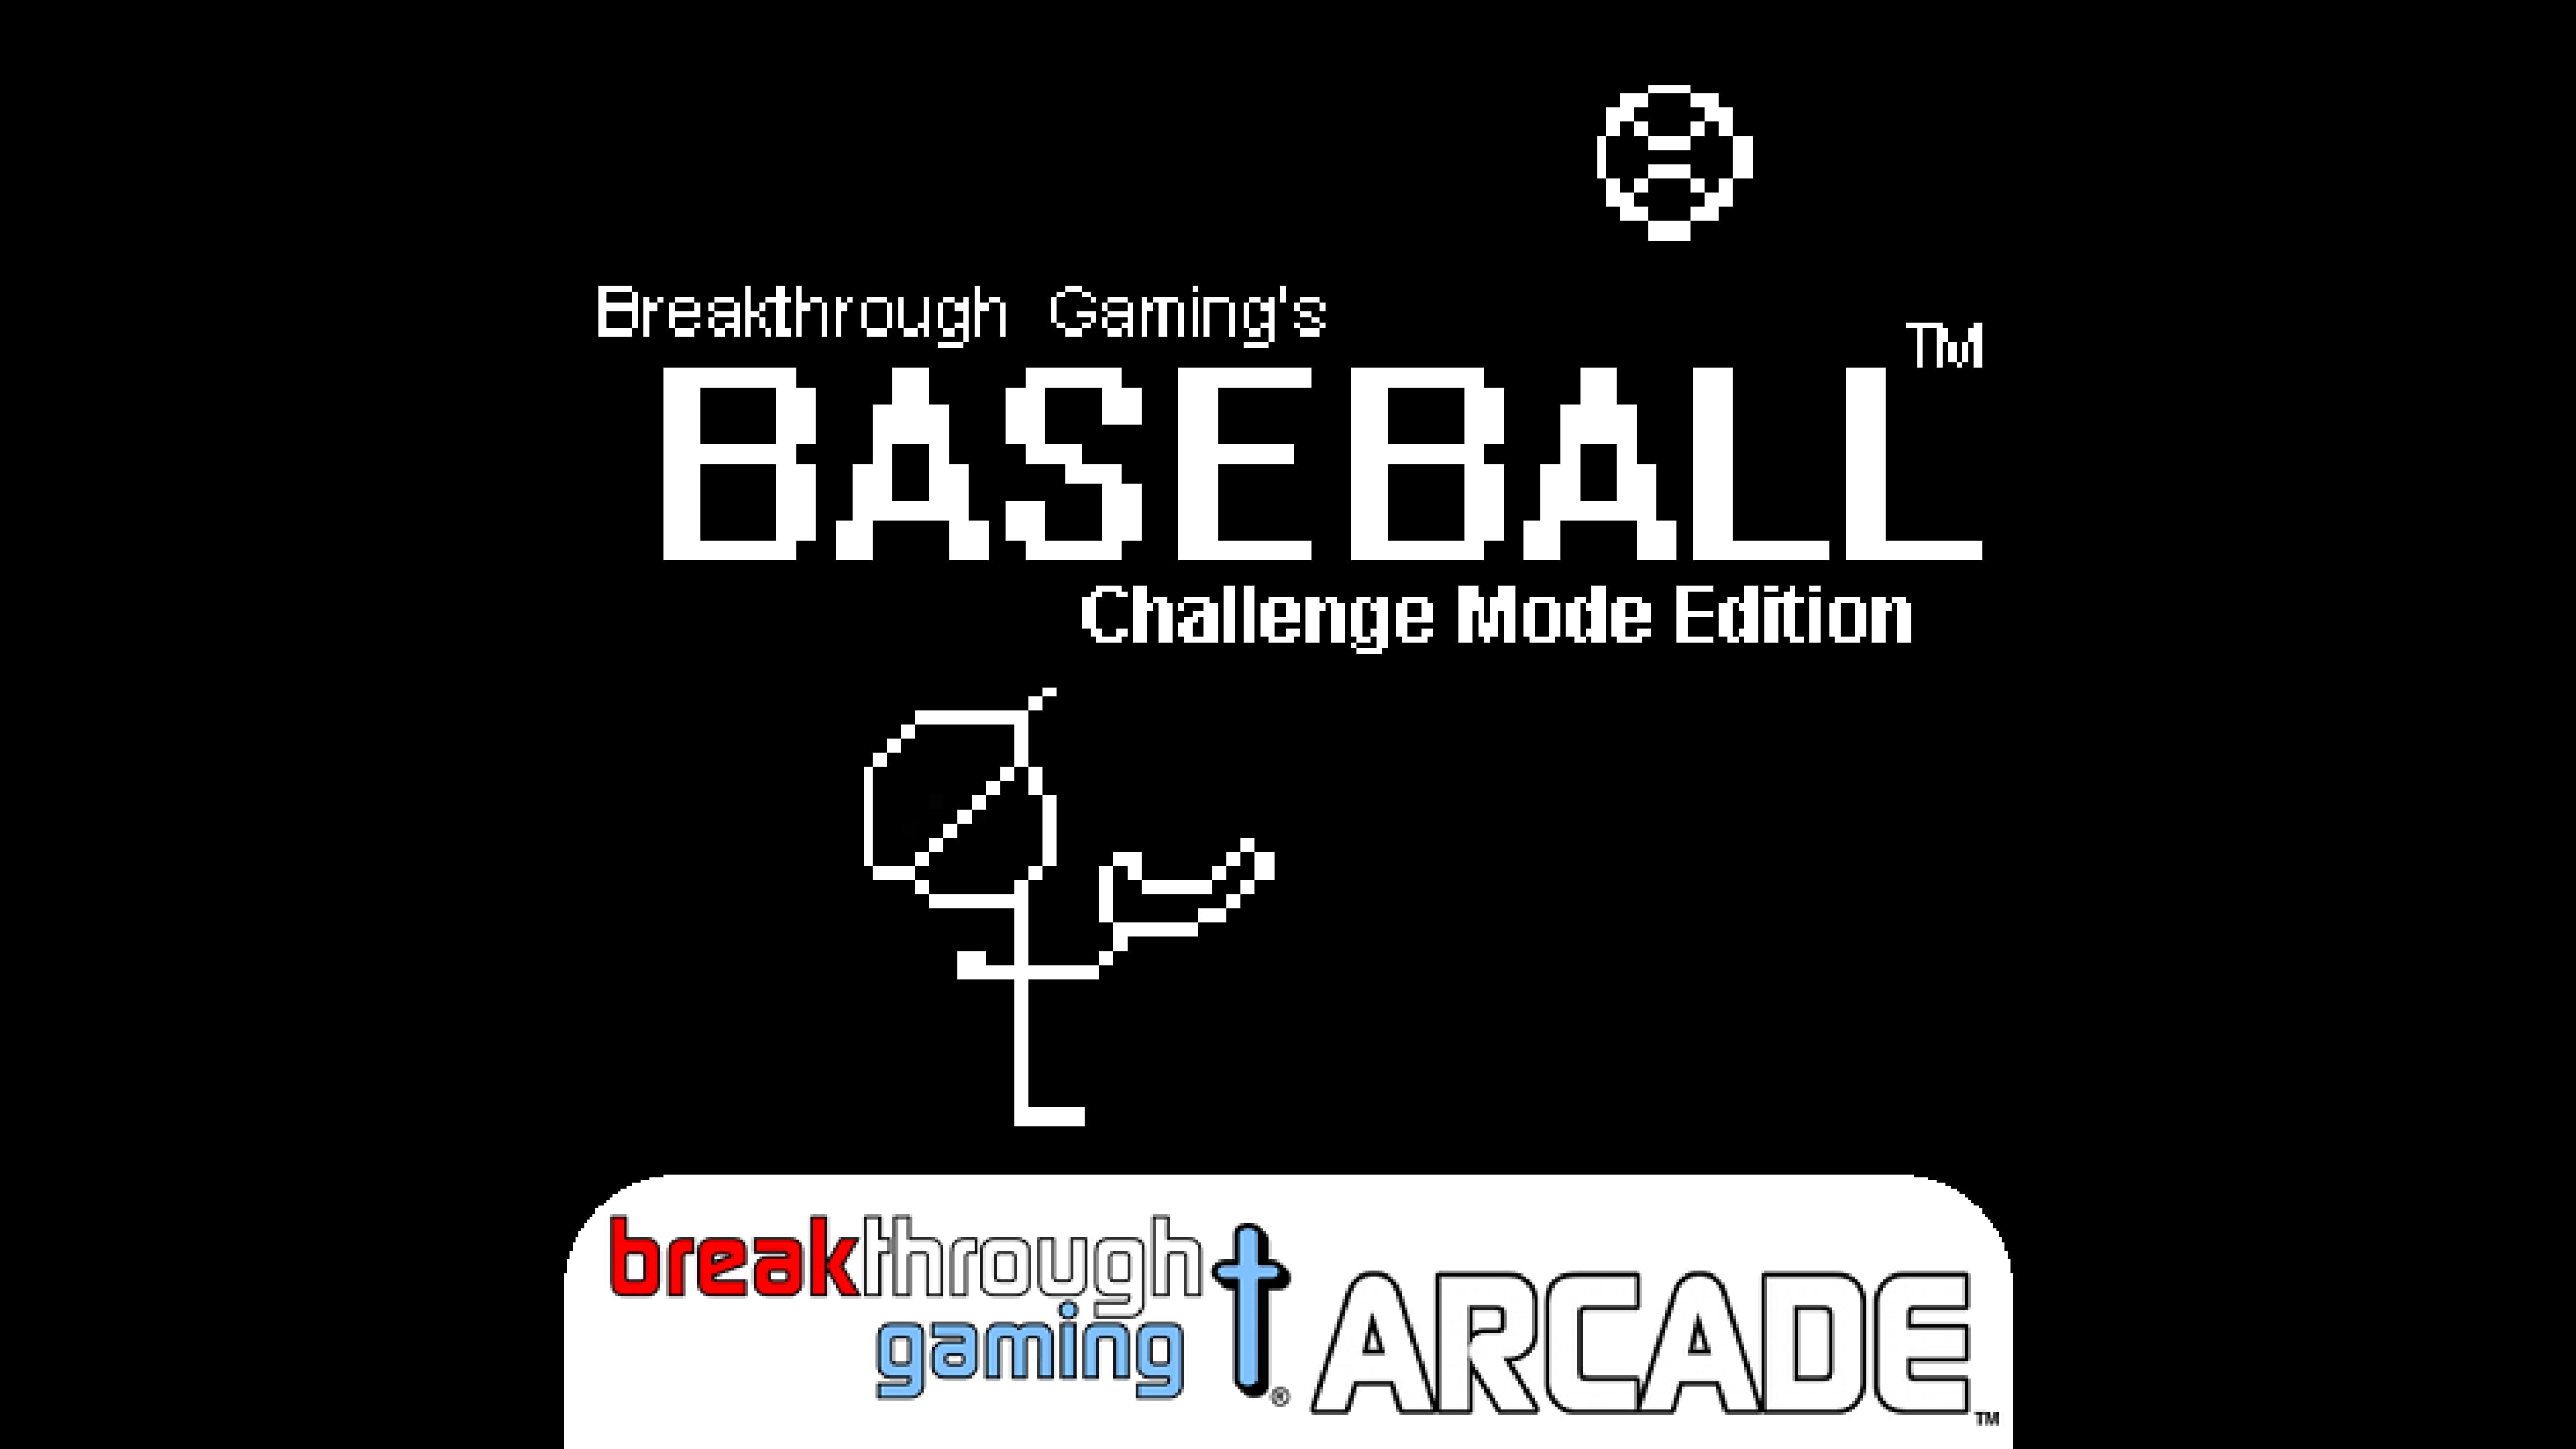 Baseball (Challenge Mode Edition) - Breakthrough Gaming Arcade